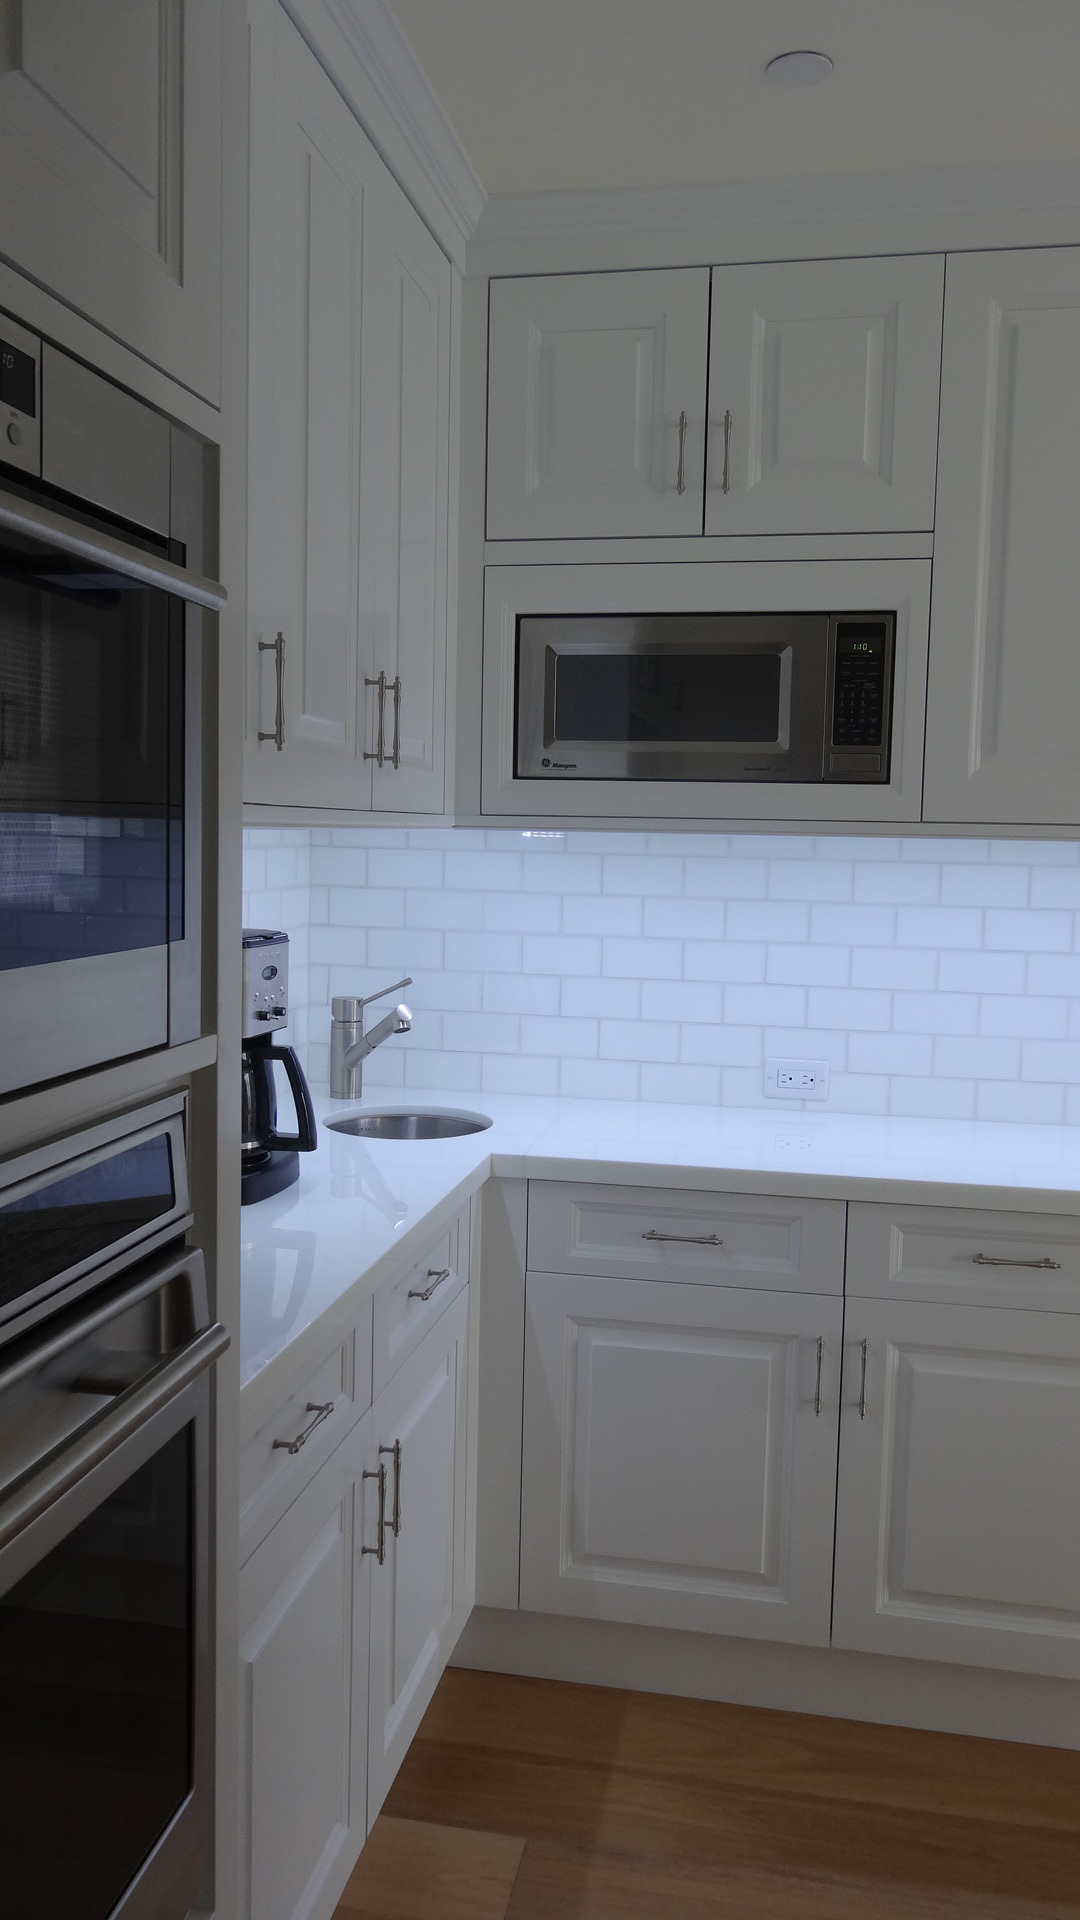 Space Planning Sub-Zero Appliances cabinetry kitchen design